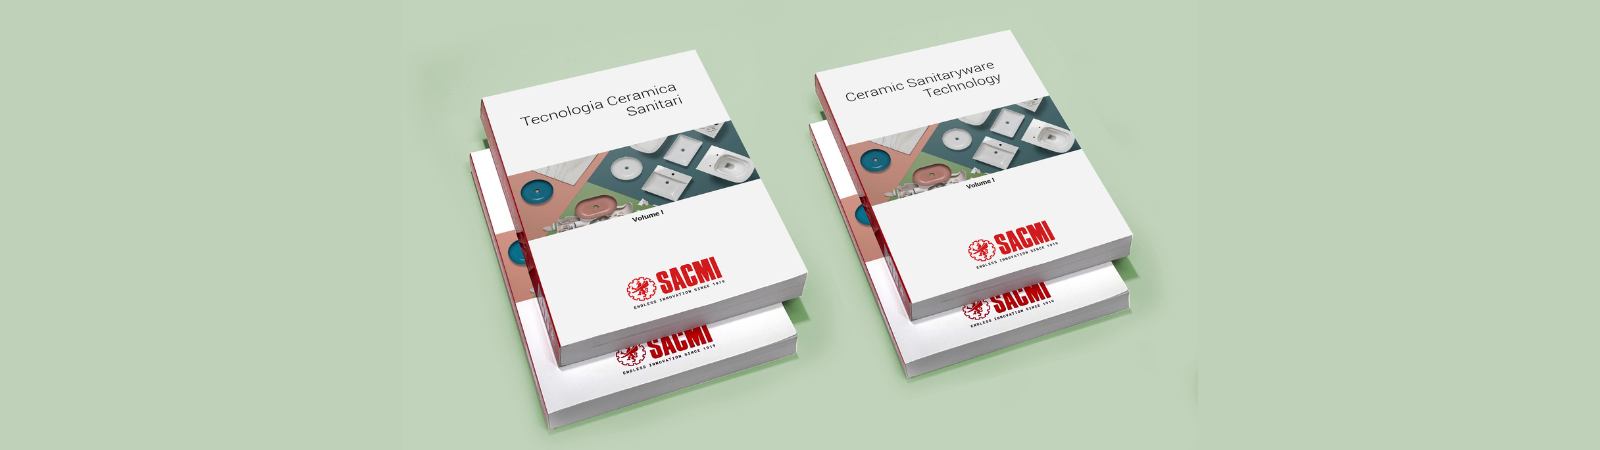 SACMI presents a new edition of its Ceramic Sanitaryware book